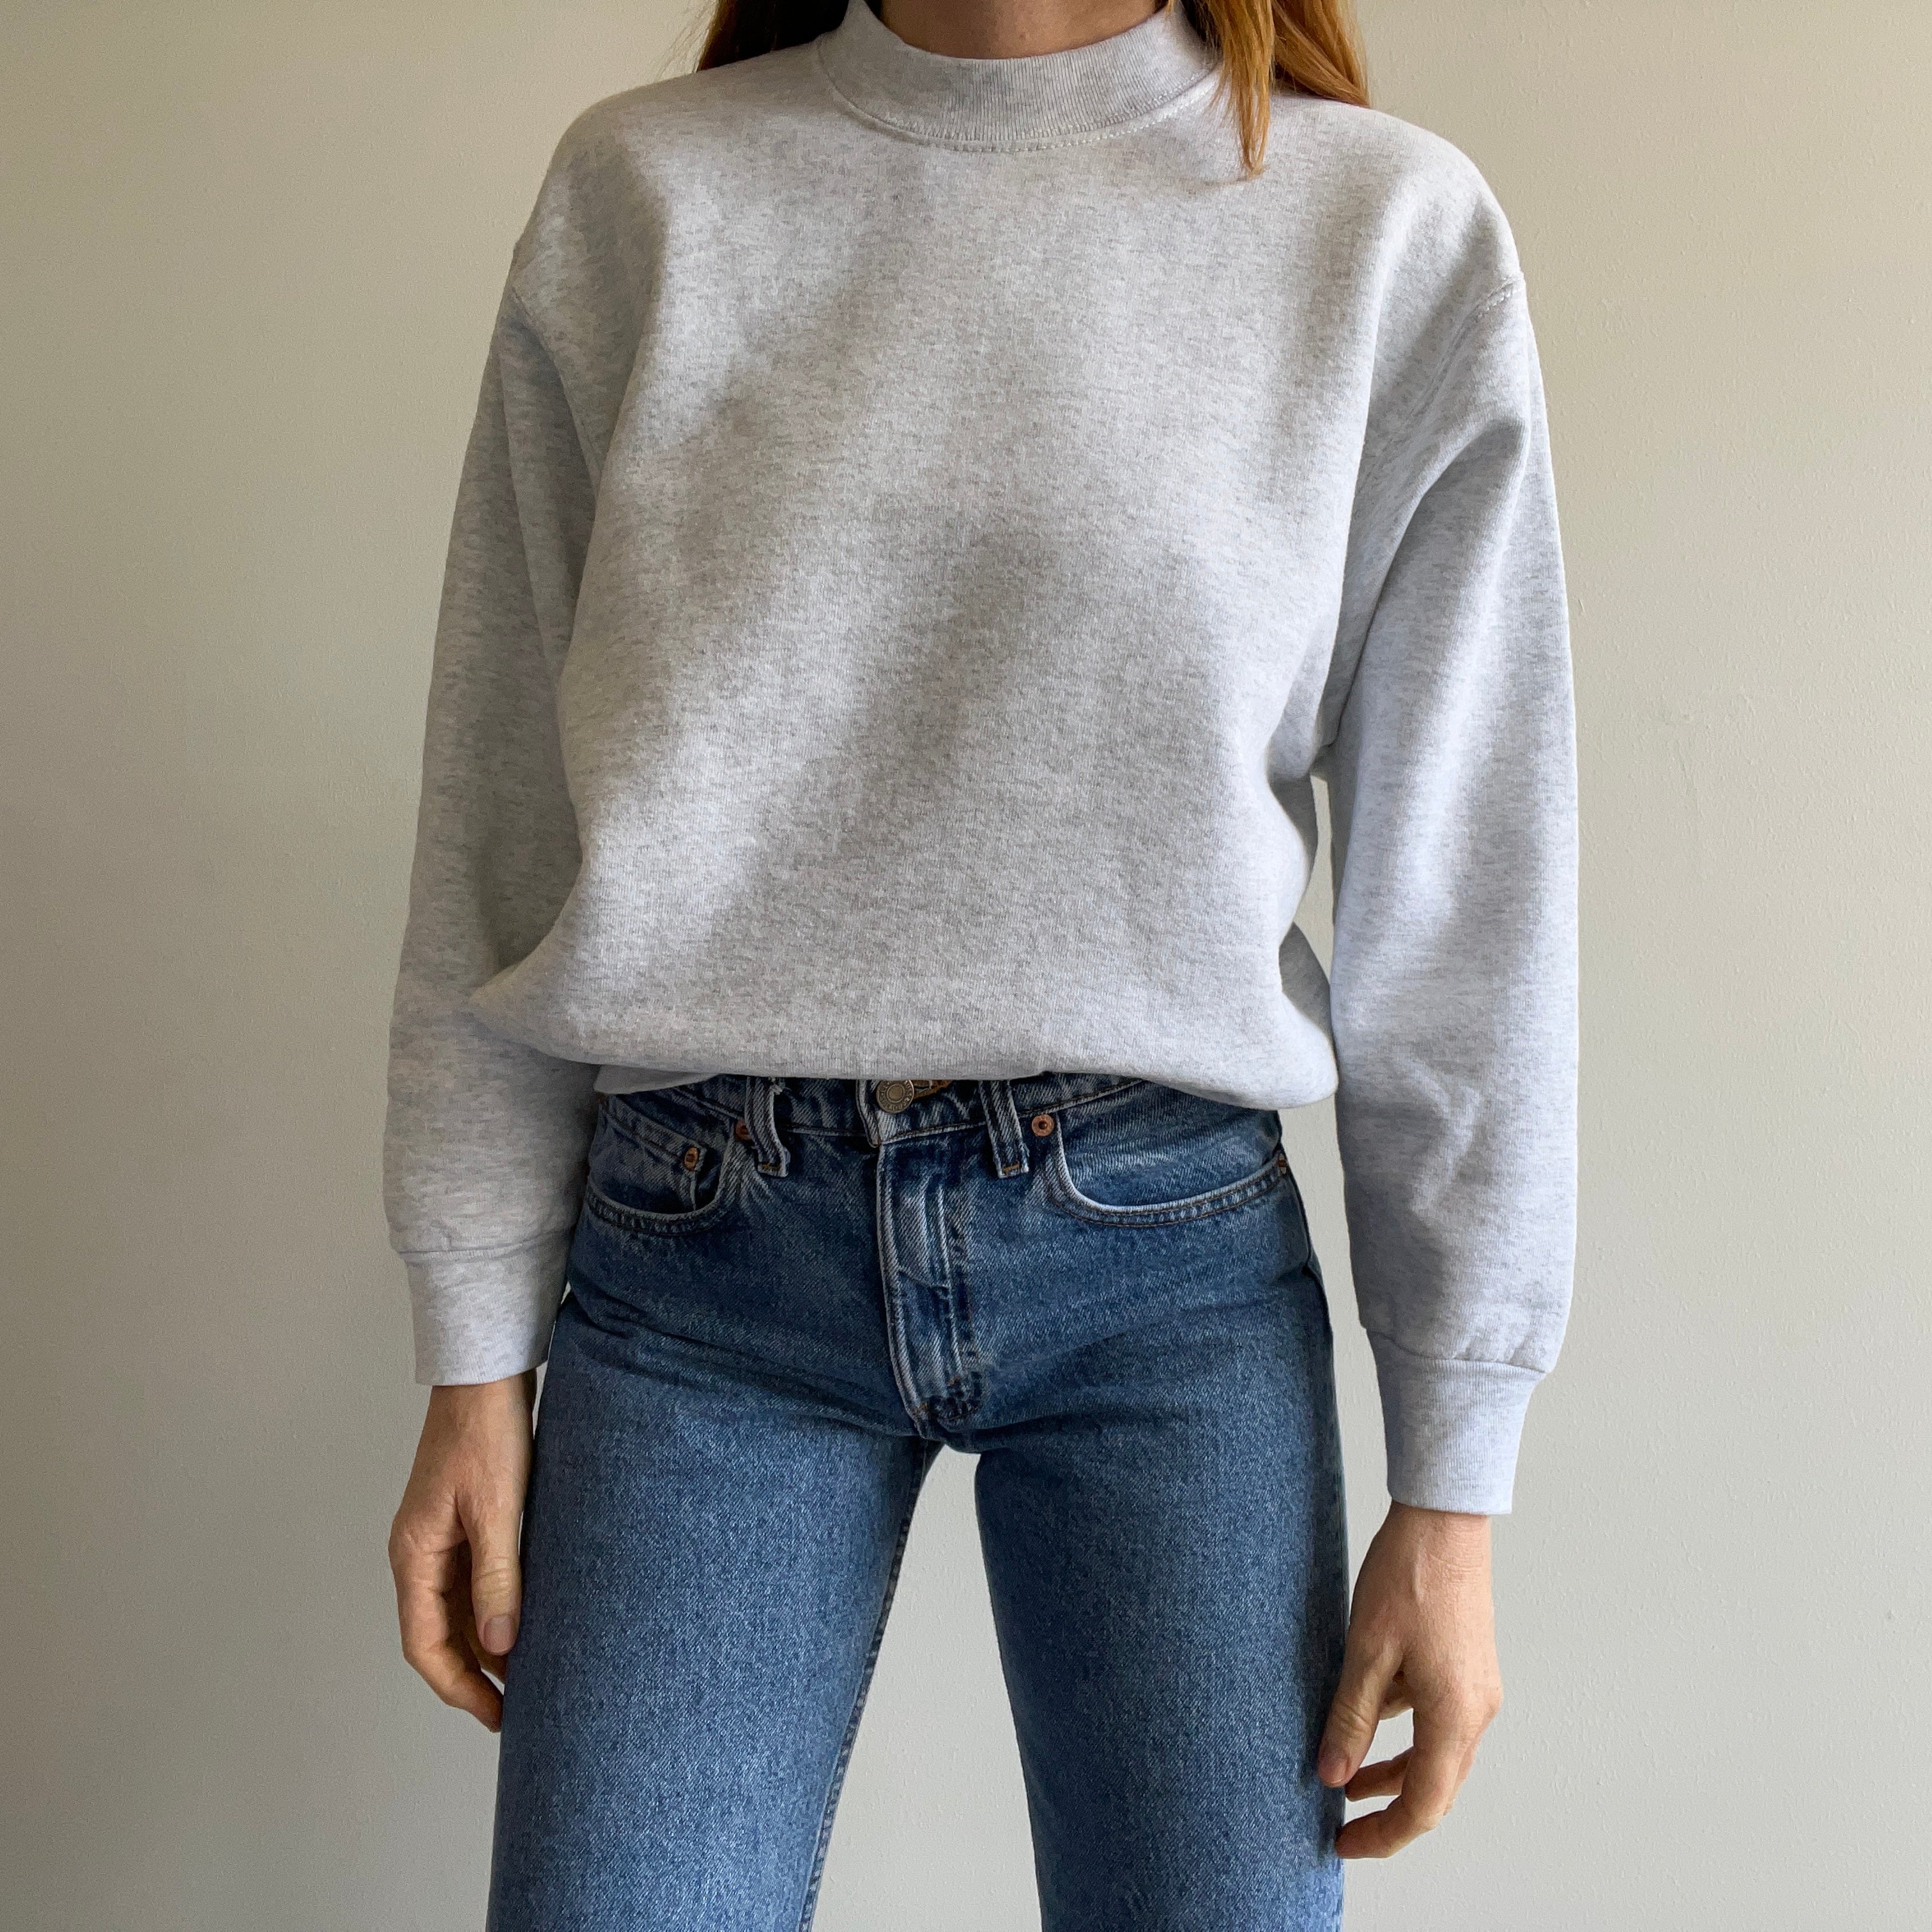 1980s Light Gray Medium Weight Blank Sweatshirt by BVD